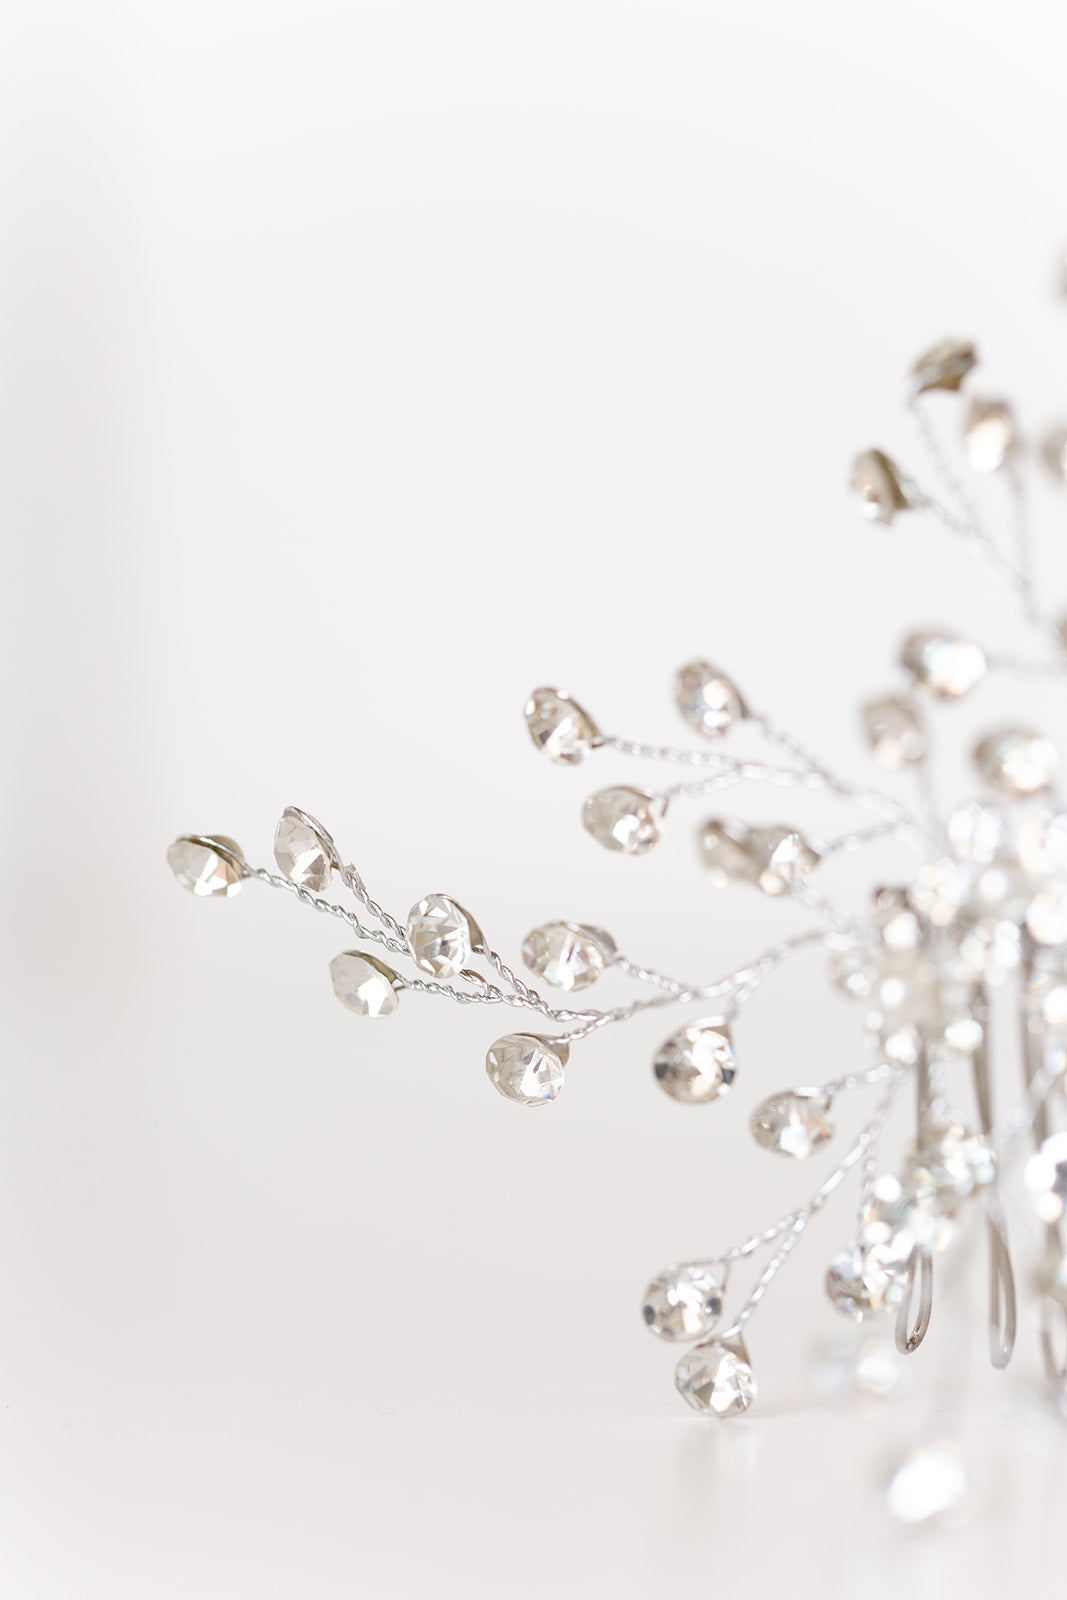 Rhinestone Wedding Hair Comb with Pearls